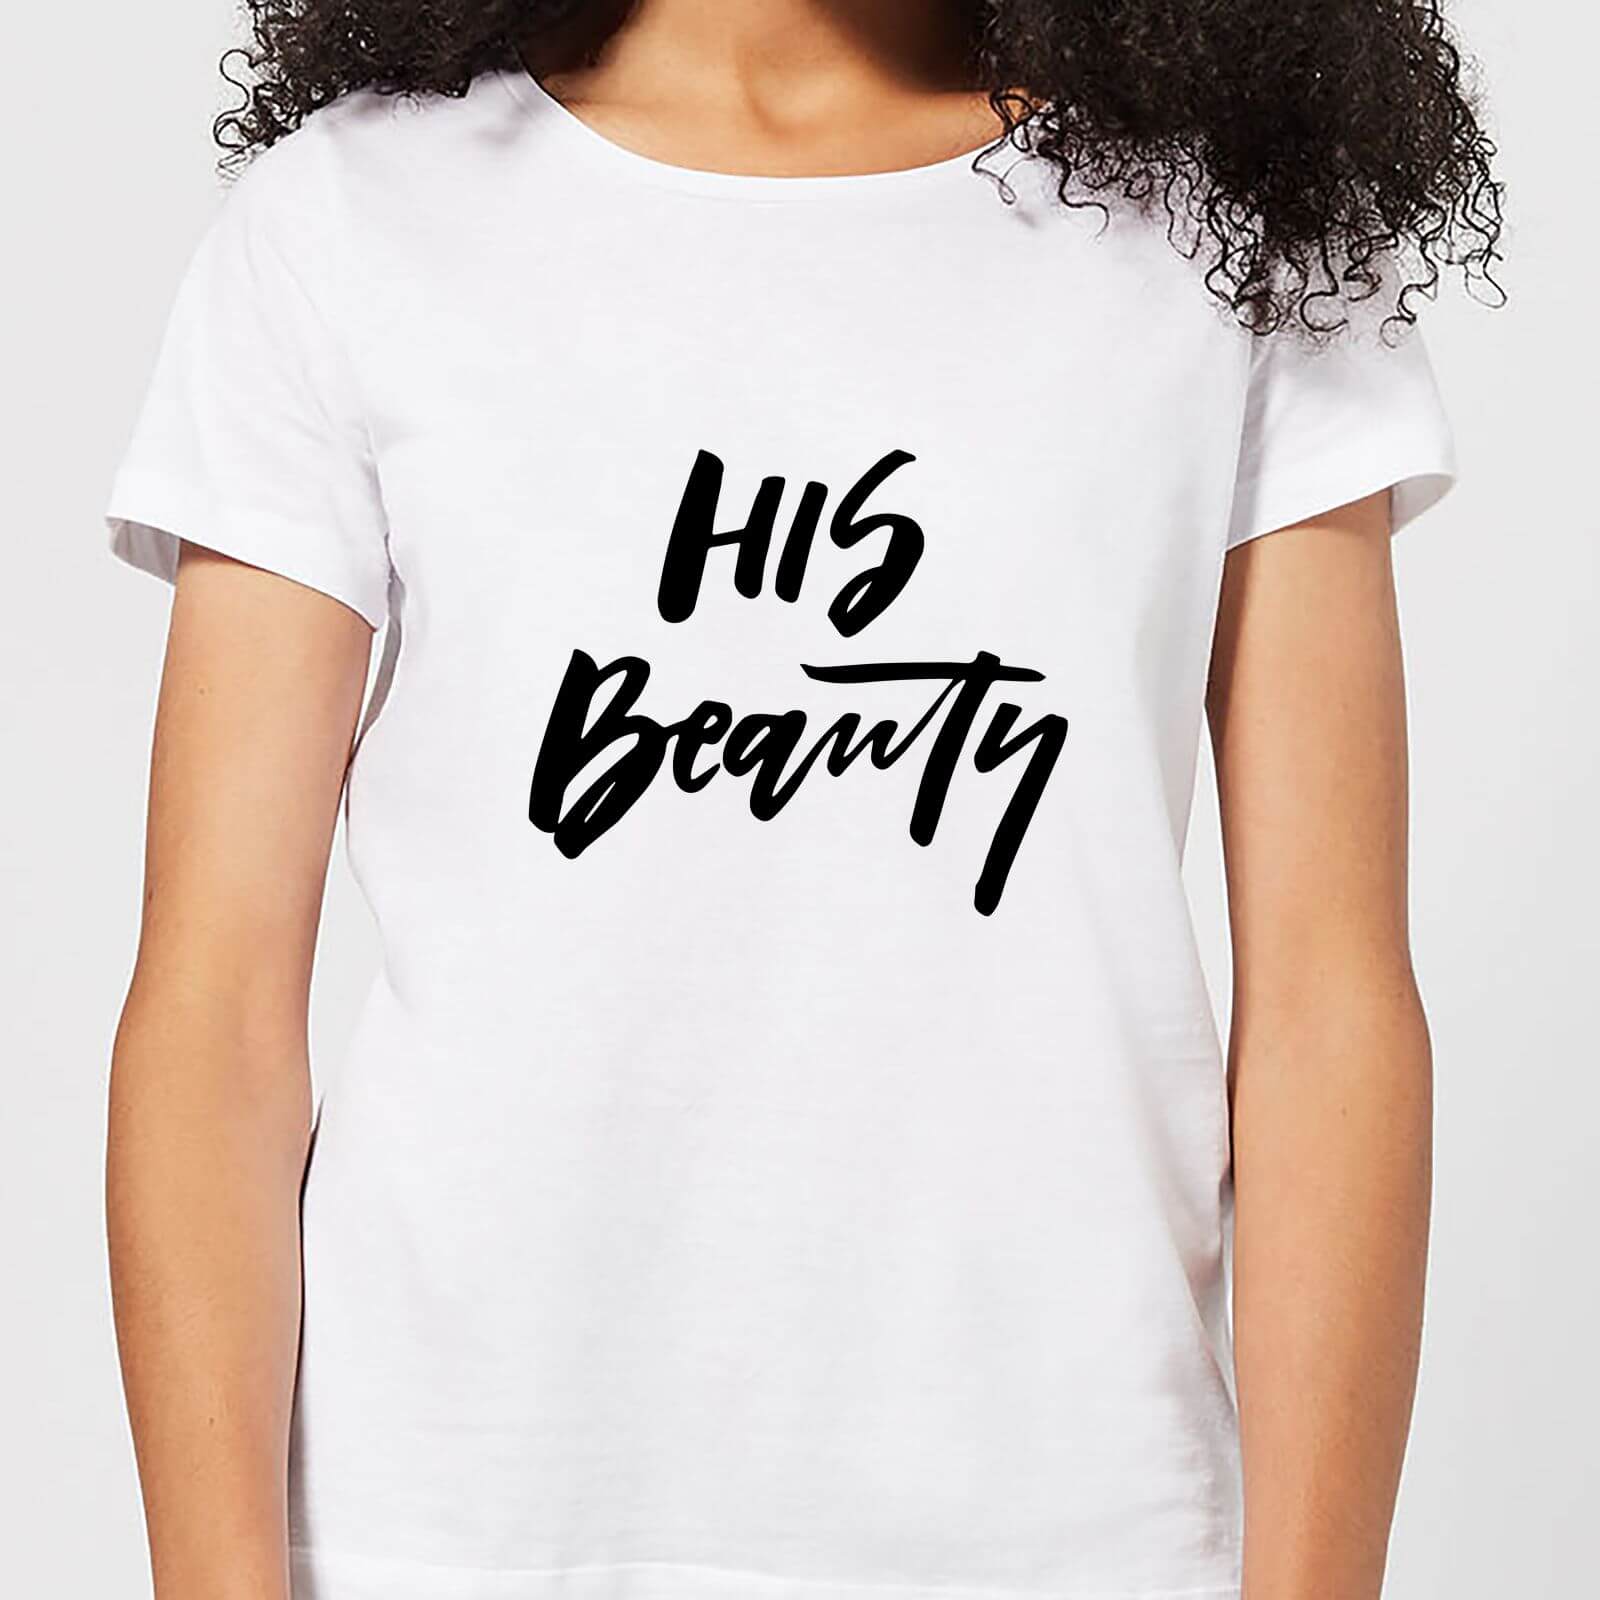 His Beauty Women's T-Shirt - White - S - White